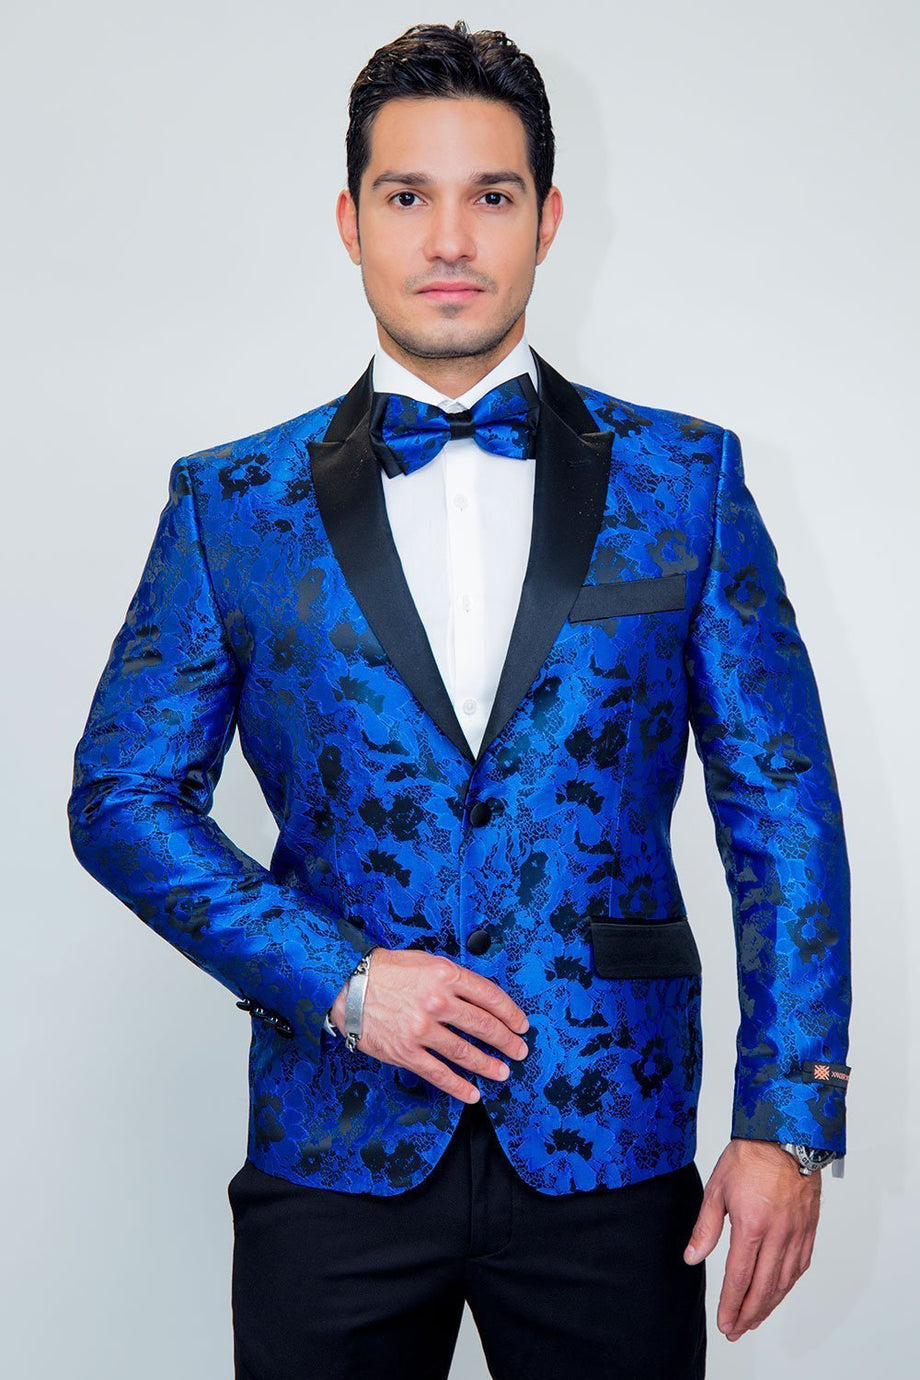 Xander Xiao "Amsterdam" Royal Blue Tuxedo Jacket (Separates)